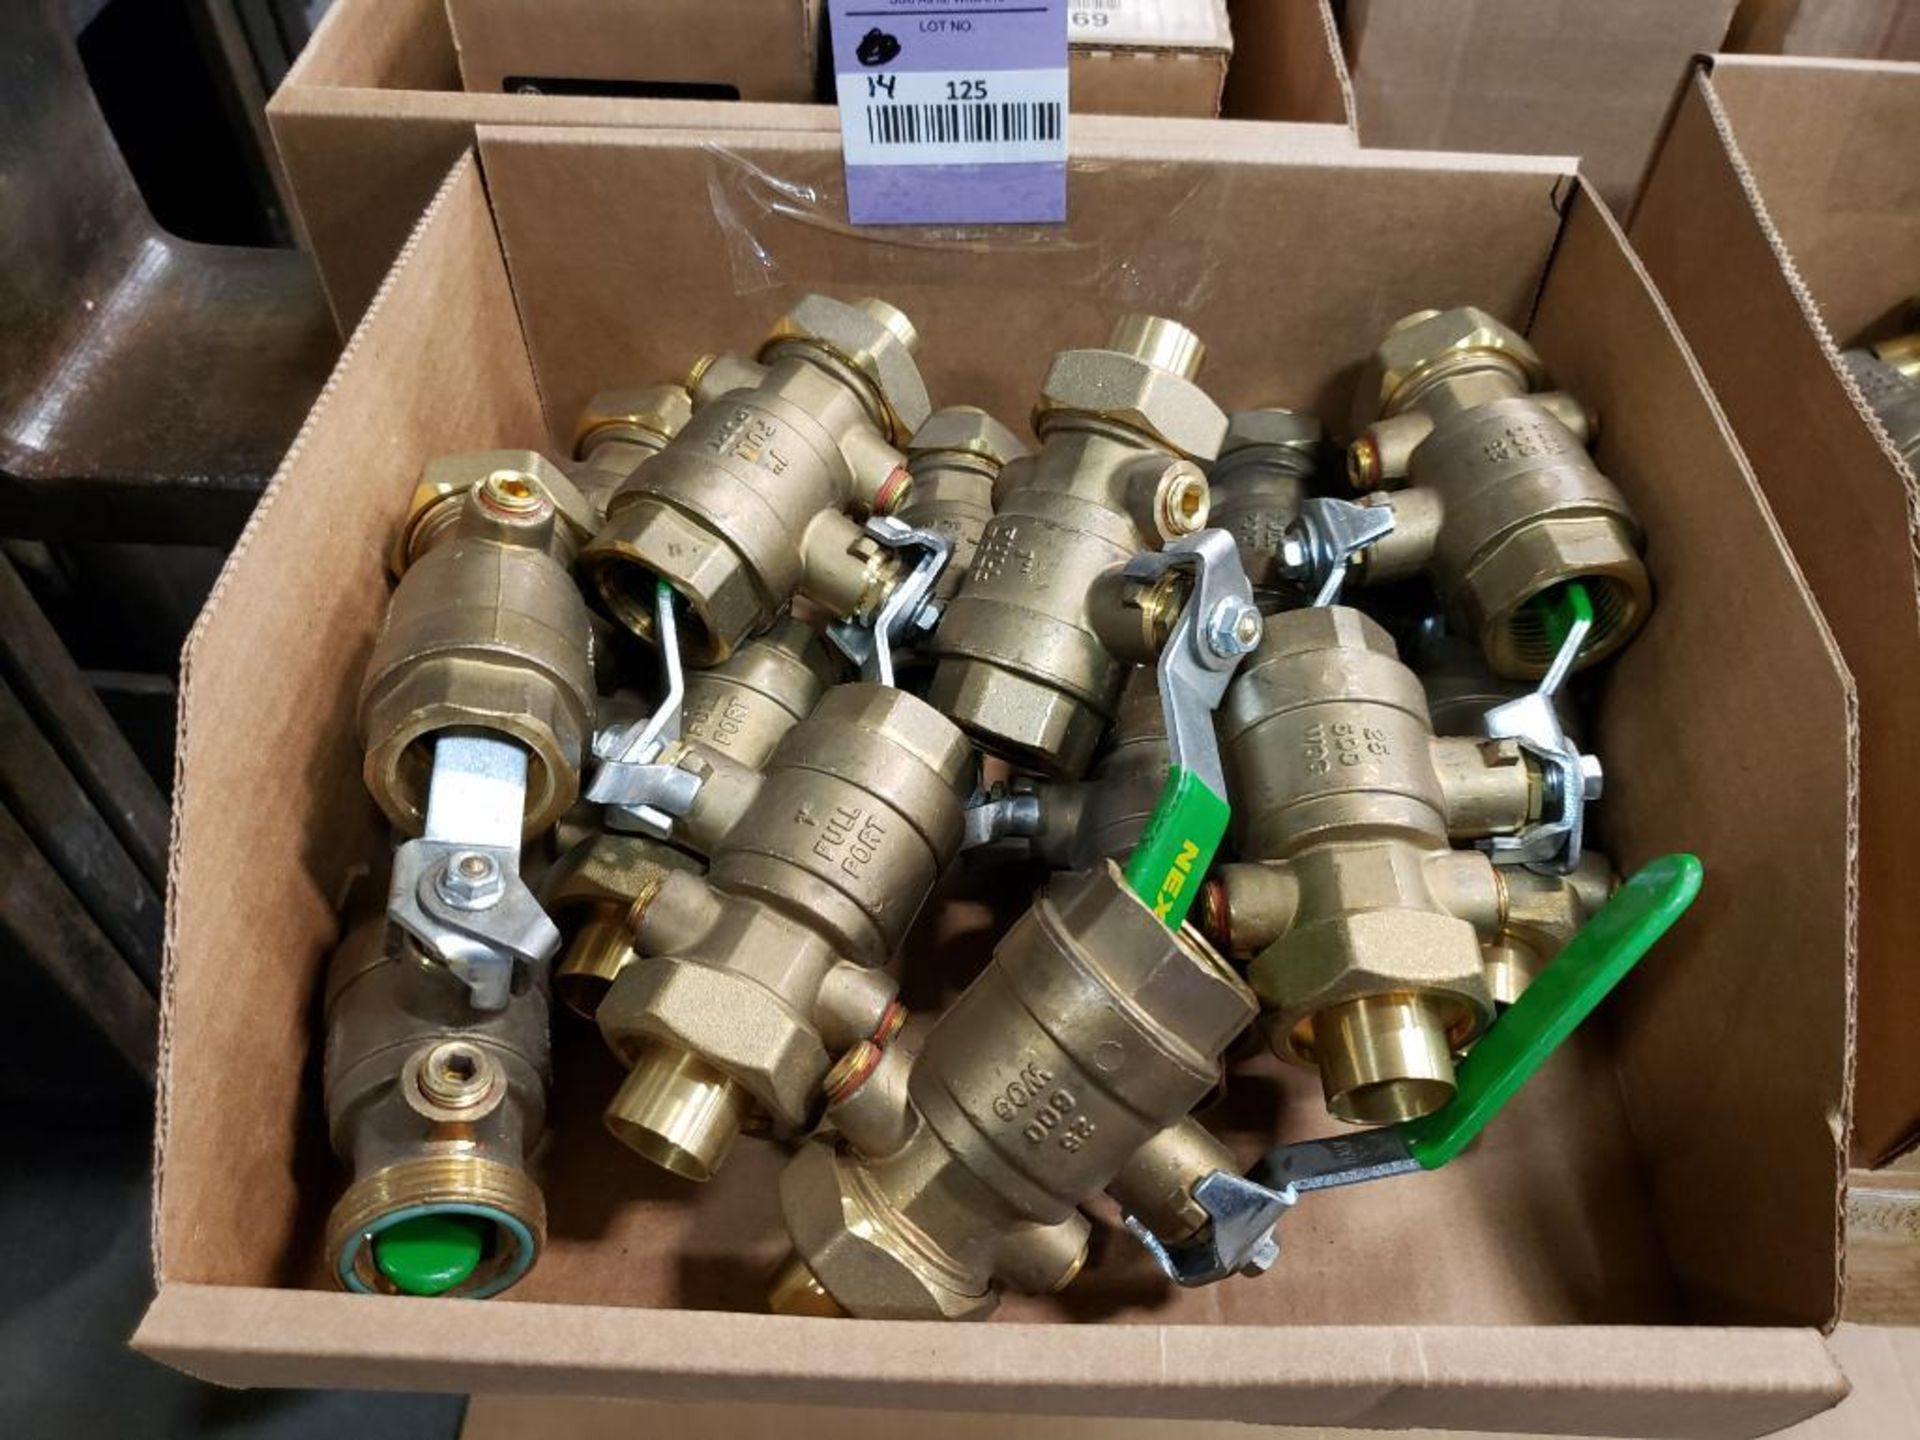 Qty 14 - Assorted brass valves.